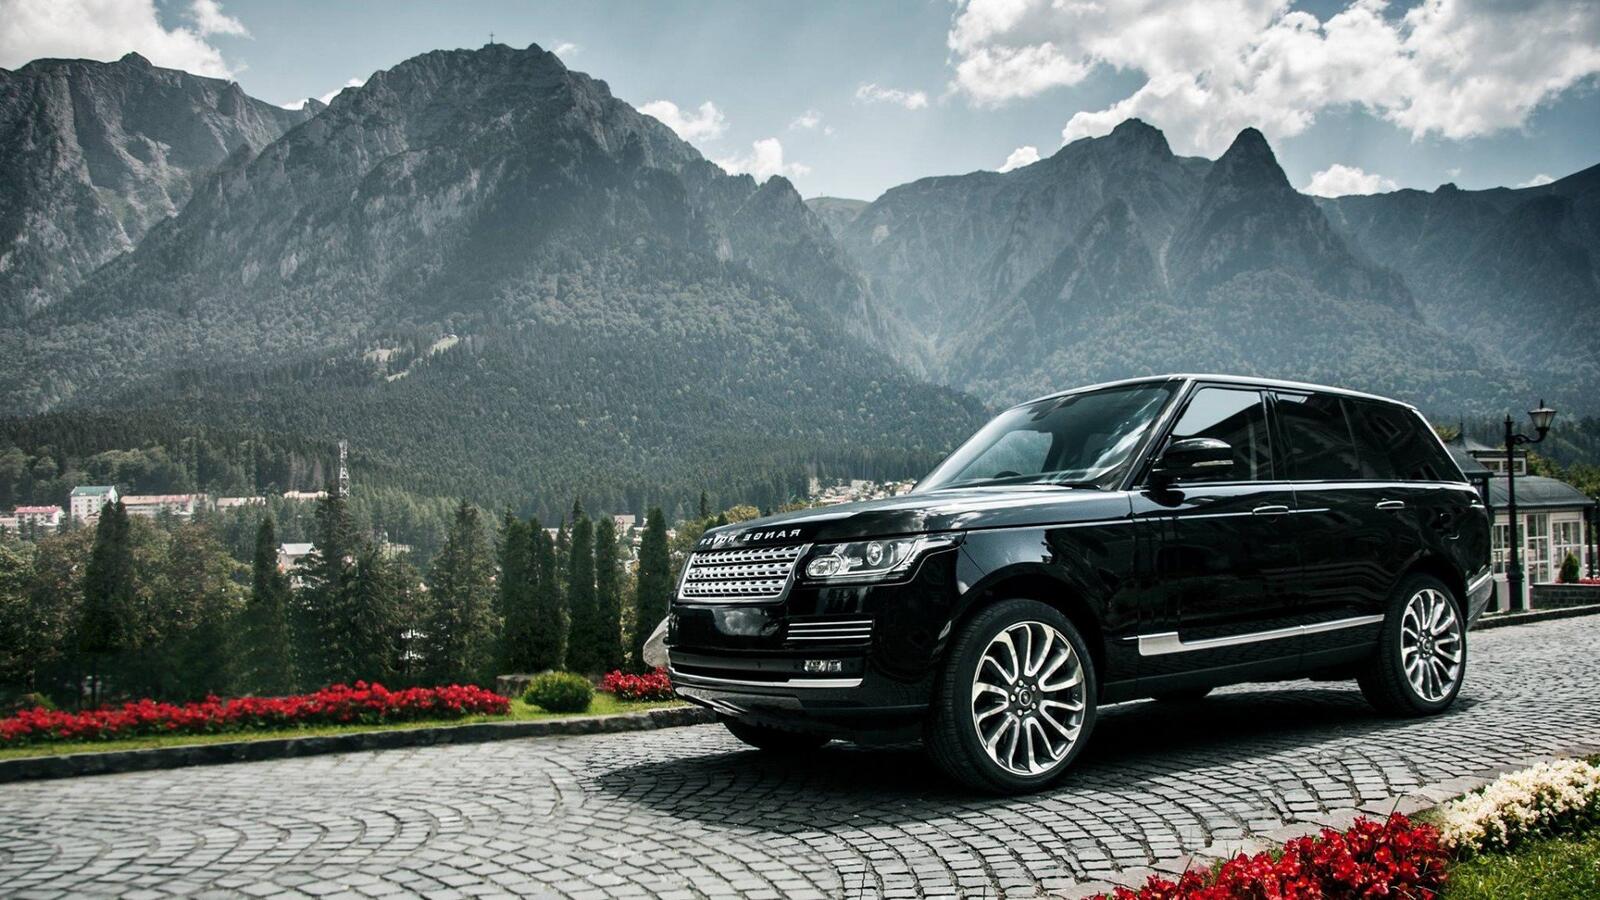 Free photo Black Range Rover against a mountain backdrop